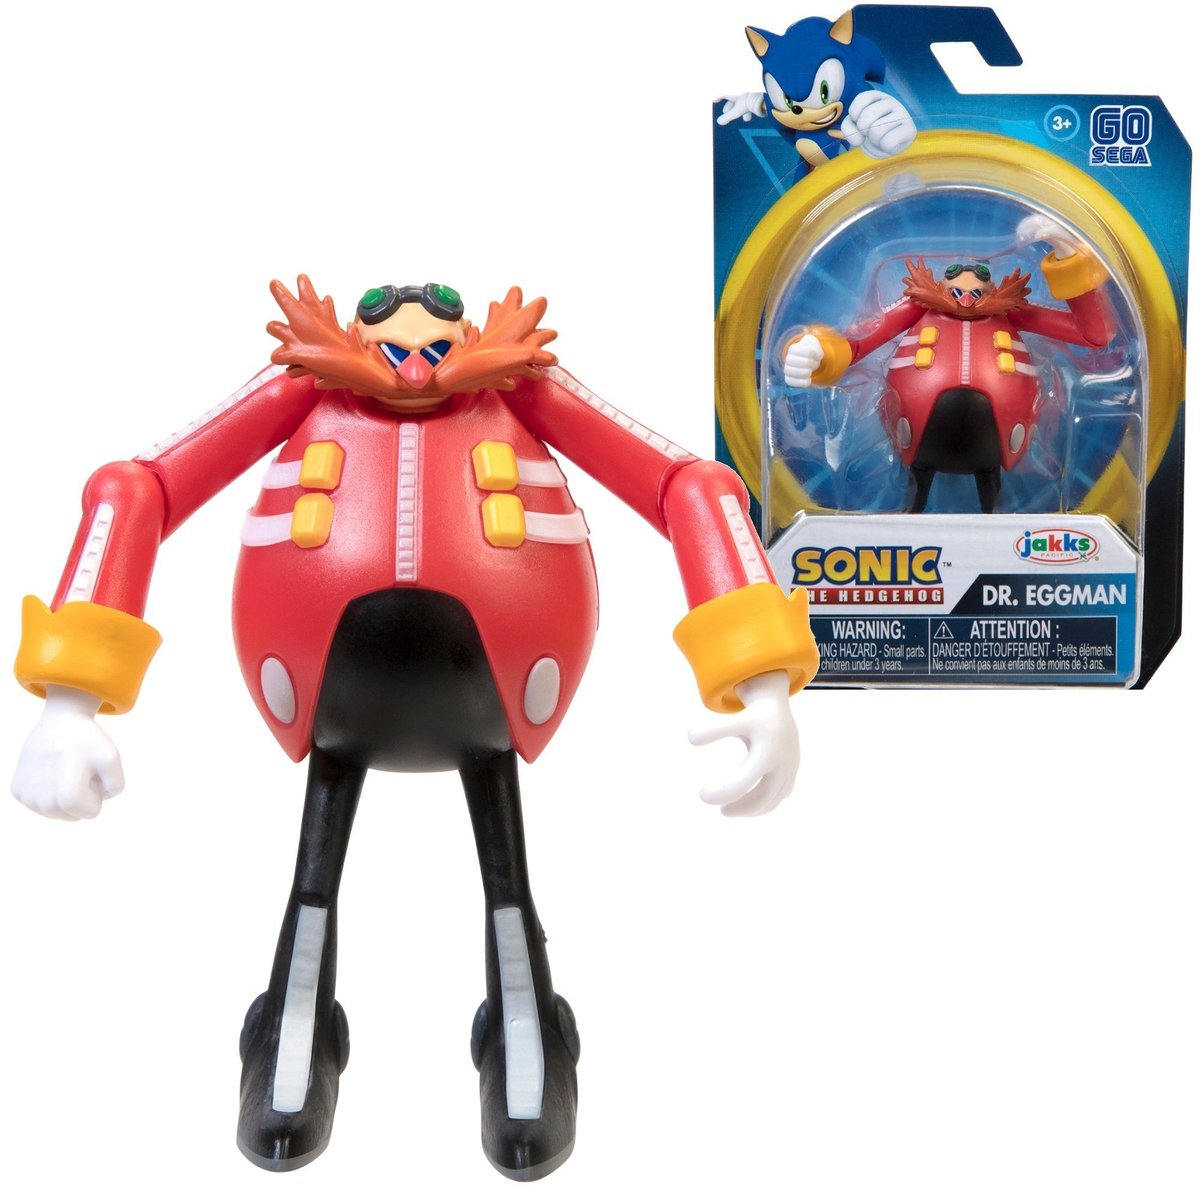 Zdjęcia - Figurka / zabawka transformująca Jakks Figurka Sonic the Hedgehog Dr. Eggman 